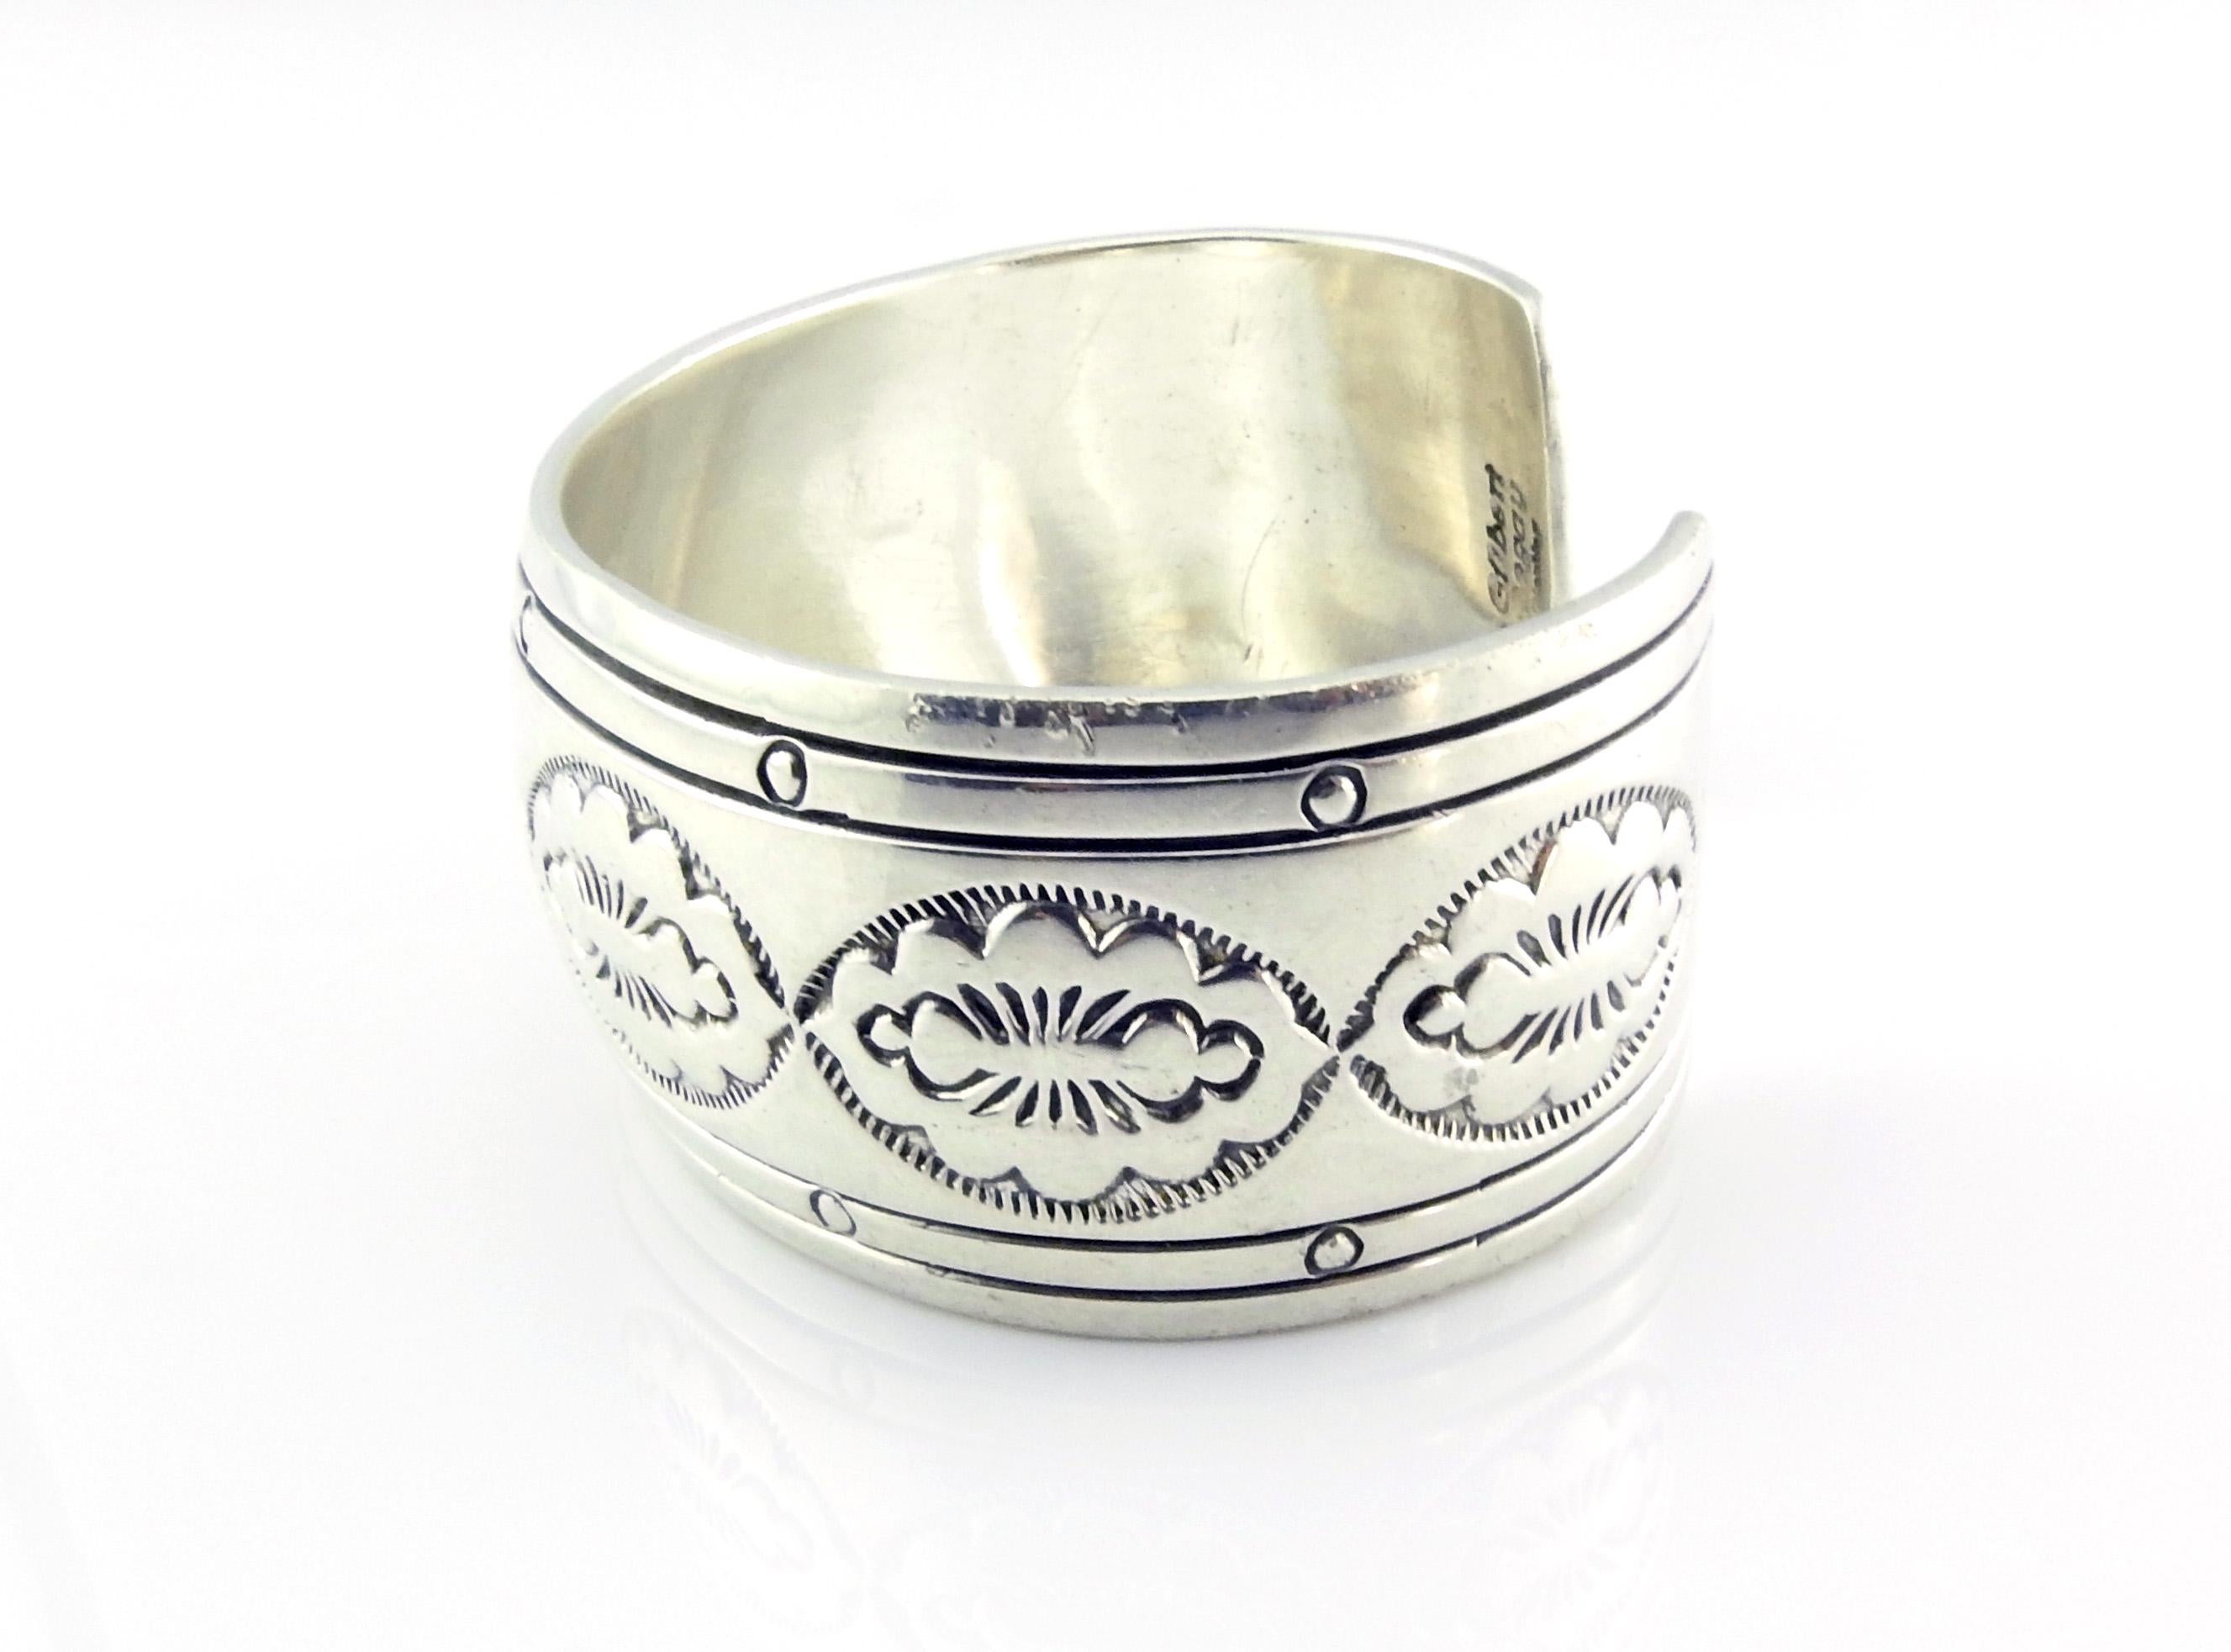 Native American Gilvert Begay sterling silver cuff bracelet.

Stamped oval shape design set in oxidized Sterling.

Marked: Sterling.

Signed: Gilbert Begay.

Measures: 5 7/8